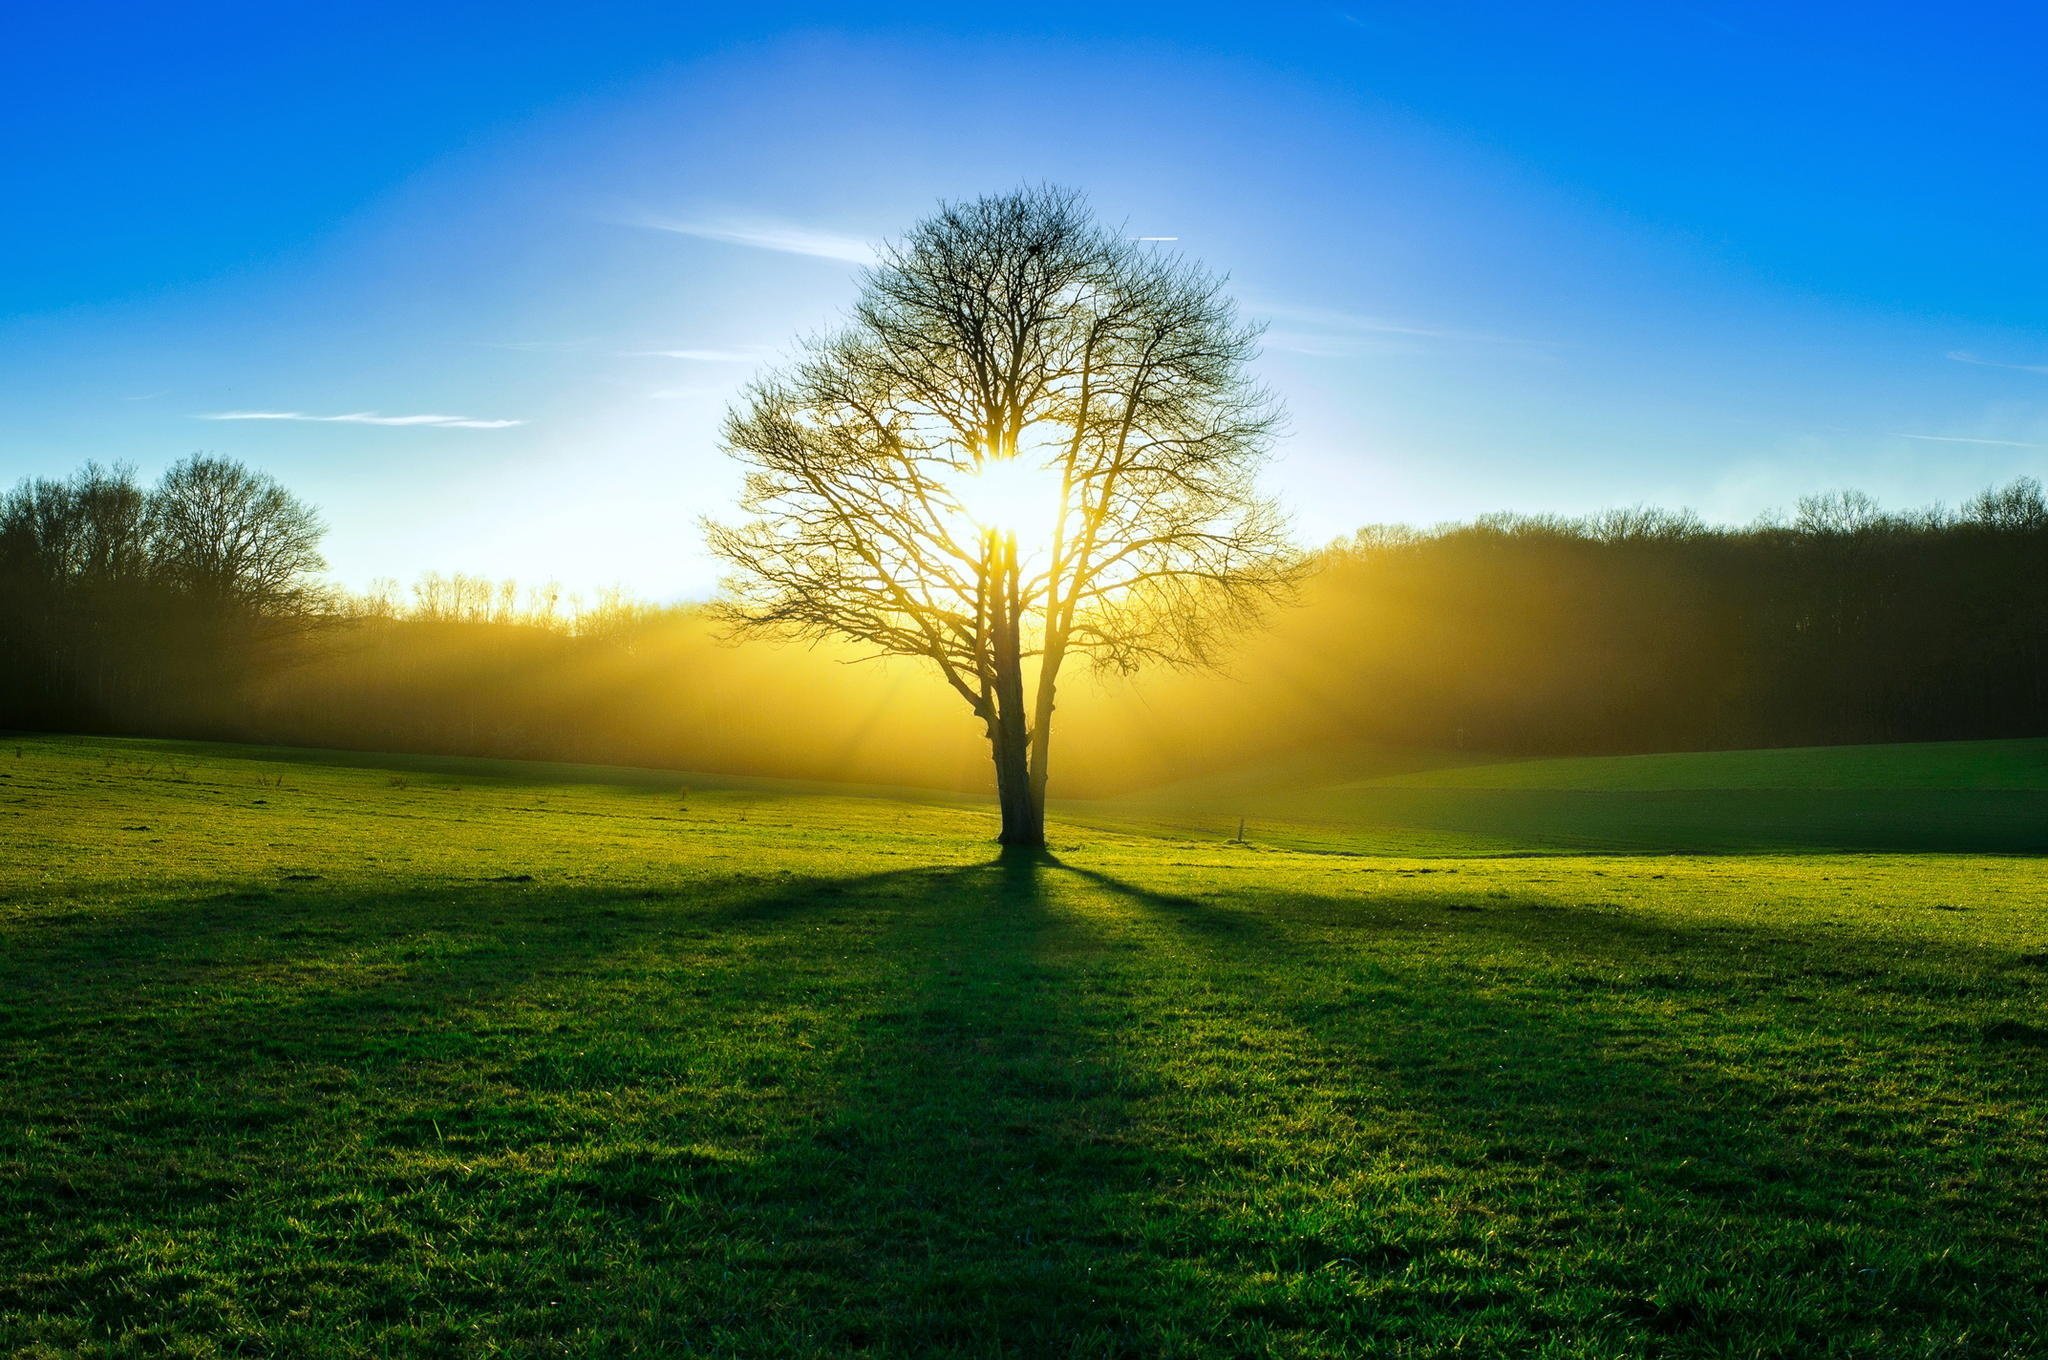 Бесплатное фото Одинокое дерево в поле на восходе солнца